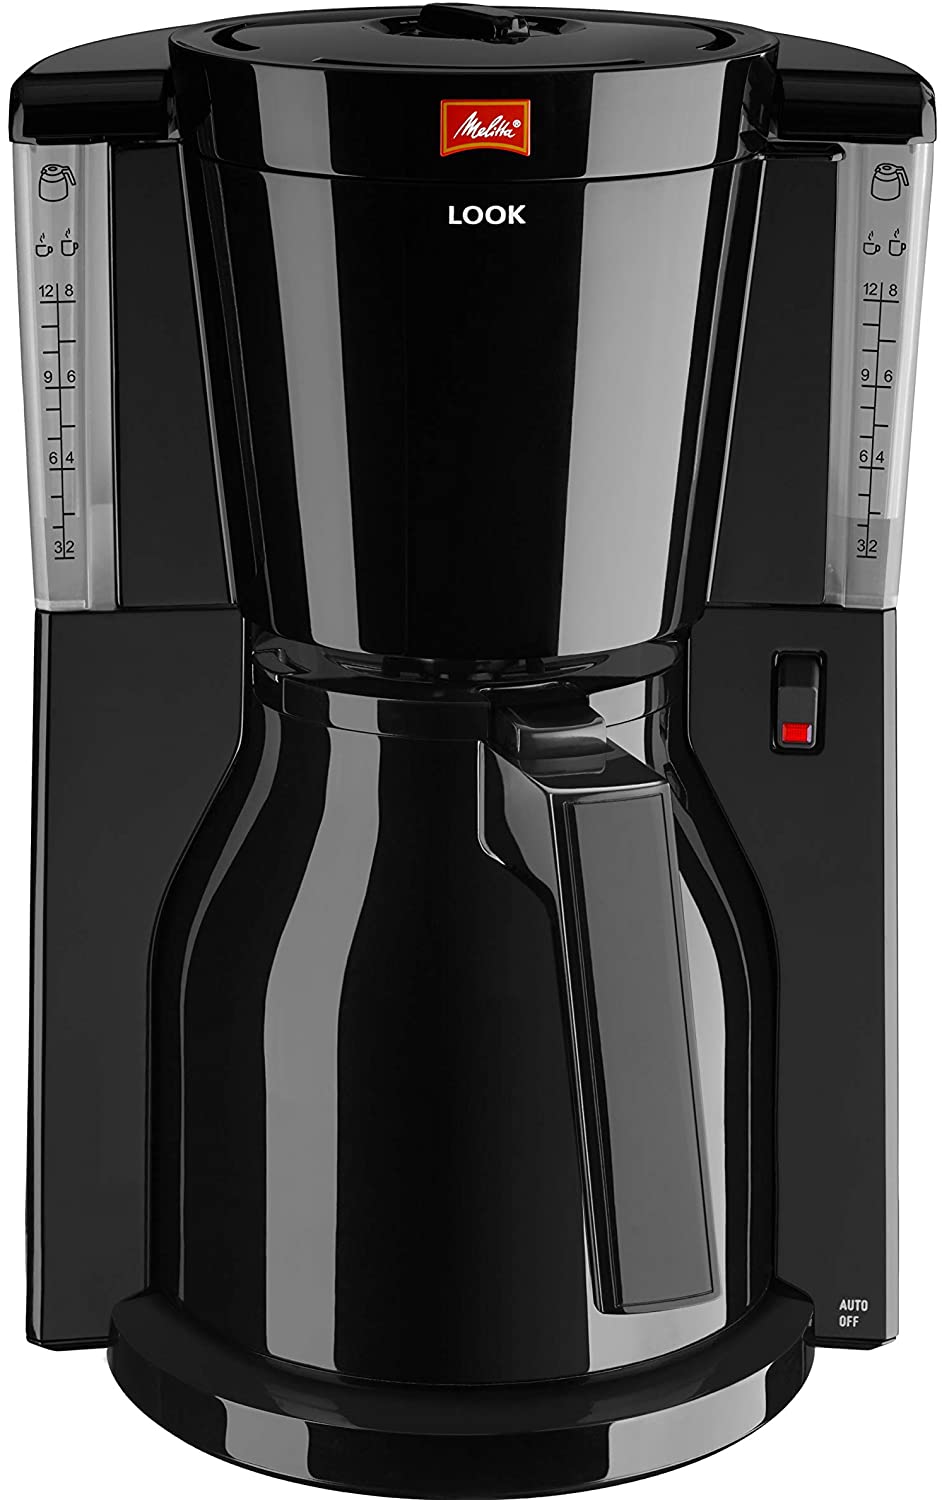 Melitta 1011-10 Look IV Therm Coffee Filter Machine, Black